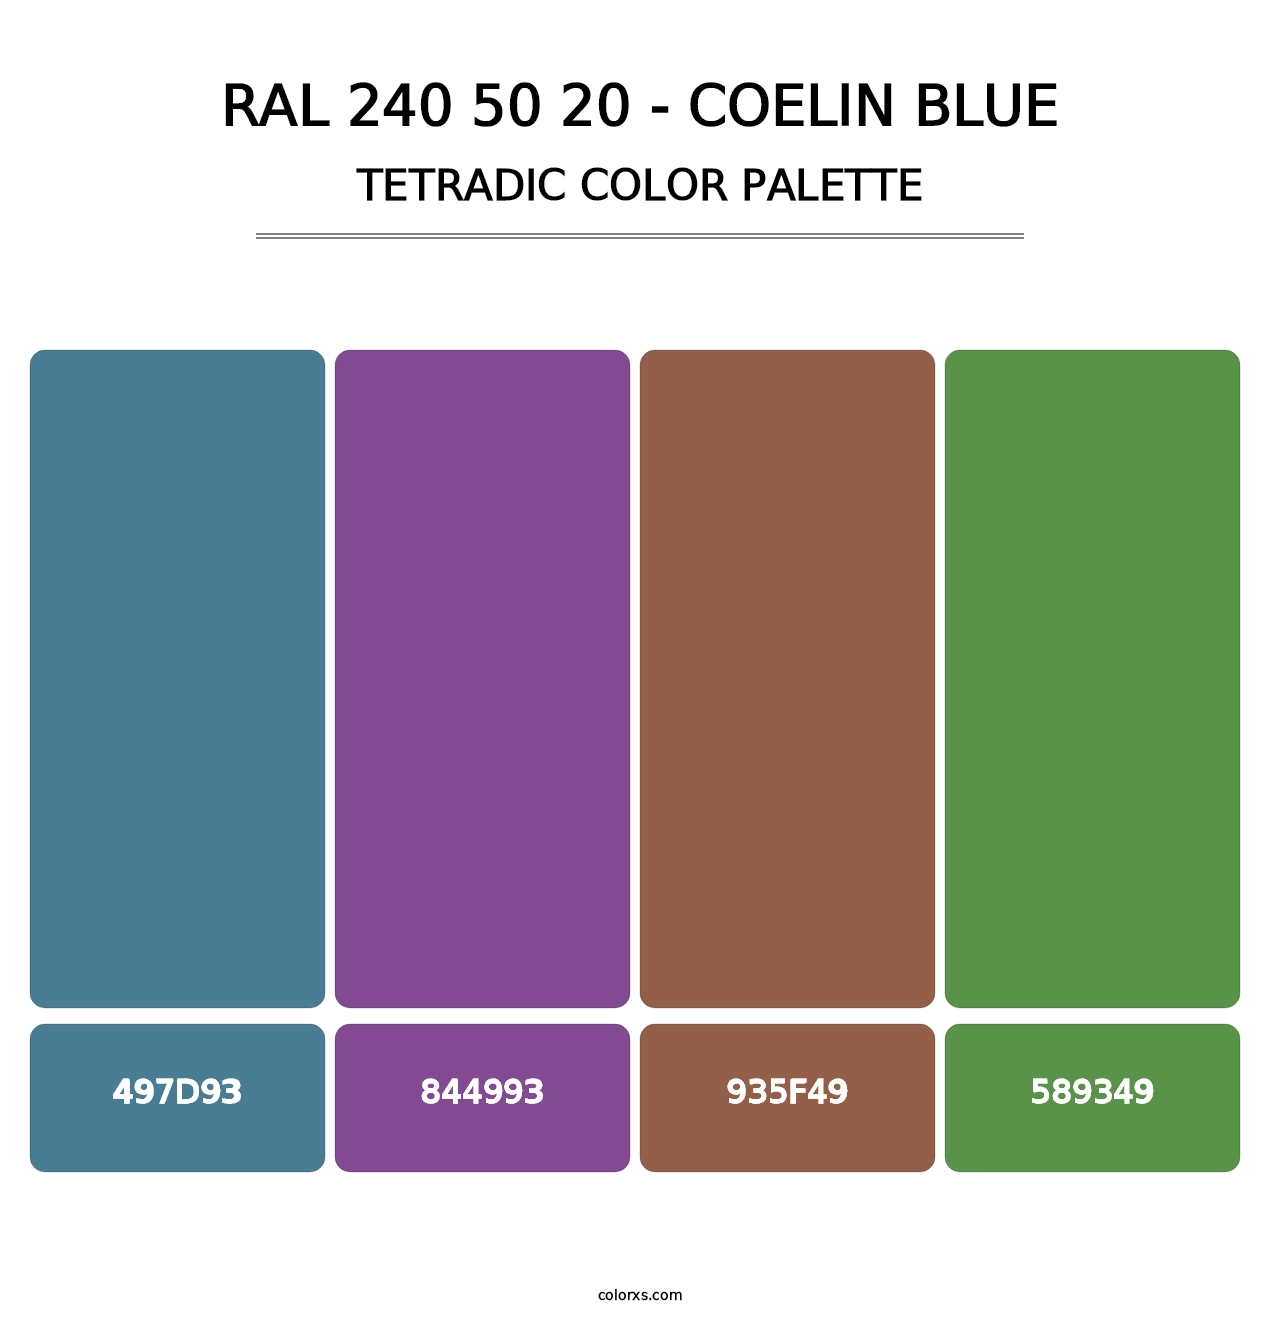 RAL 240 50 20 - Coelin Blue - Tetradic Color Palette